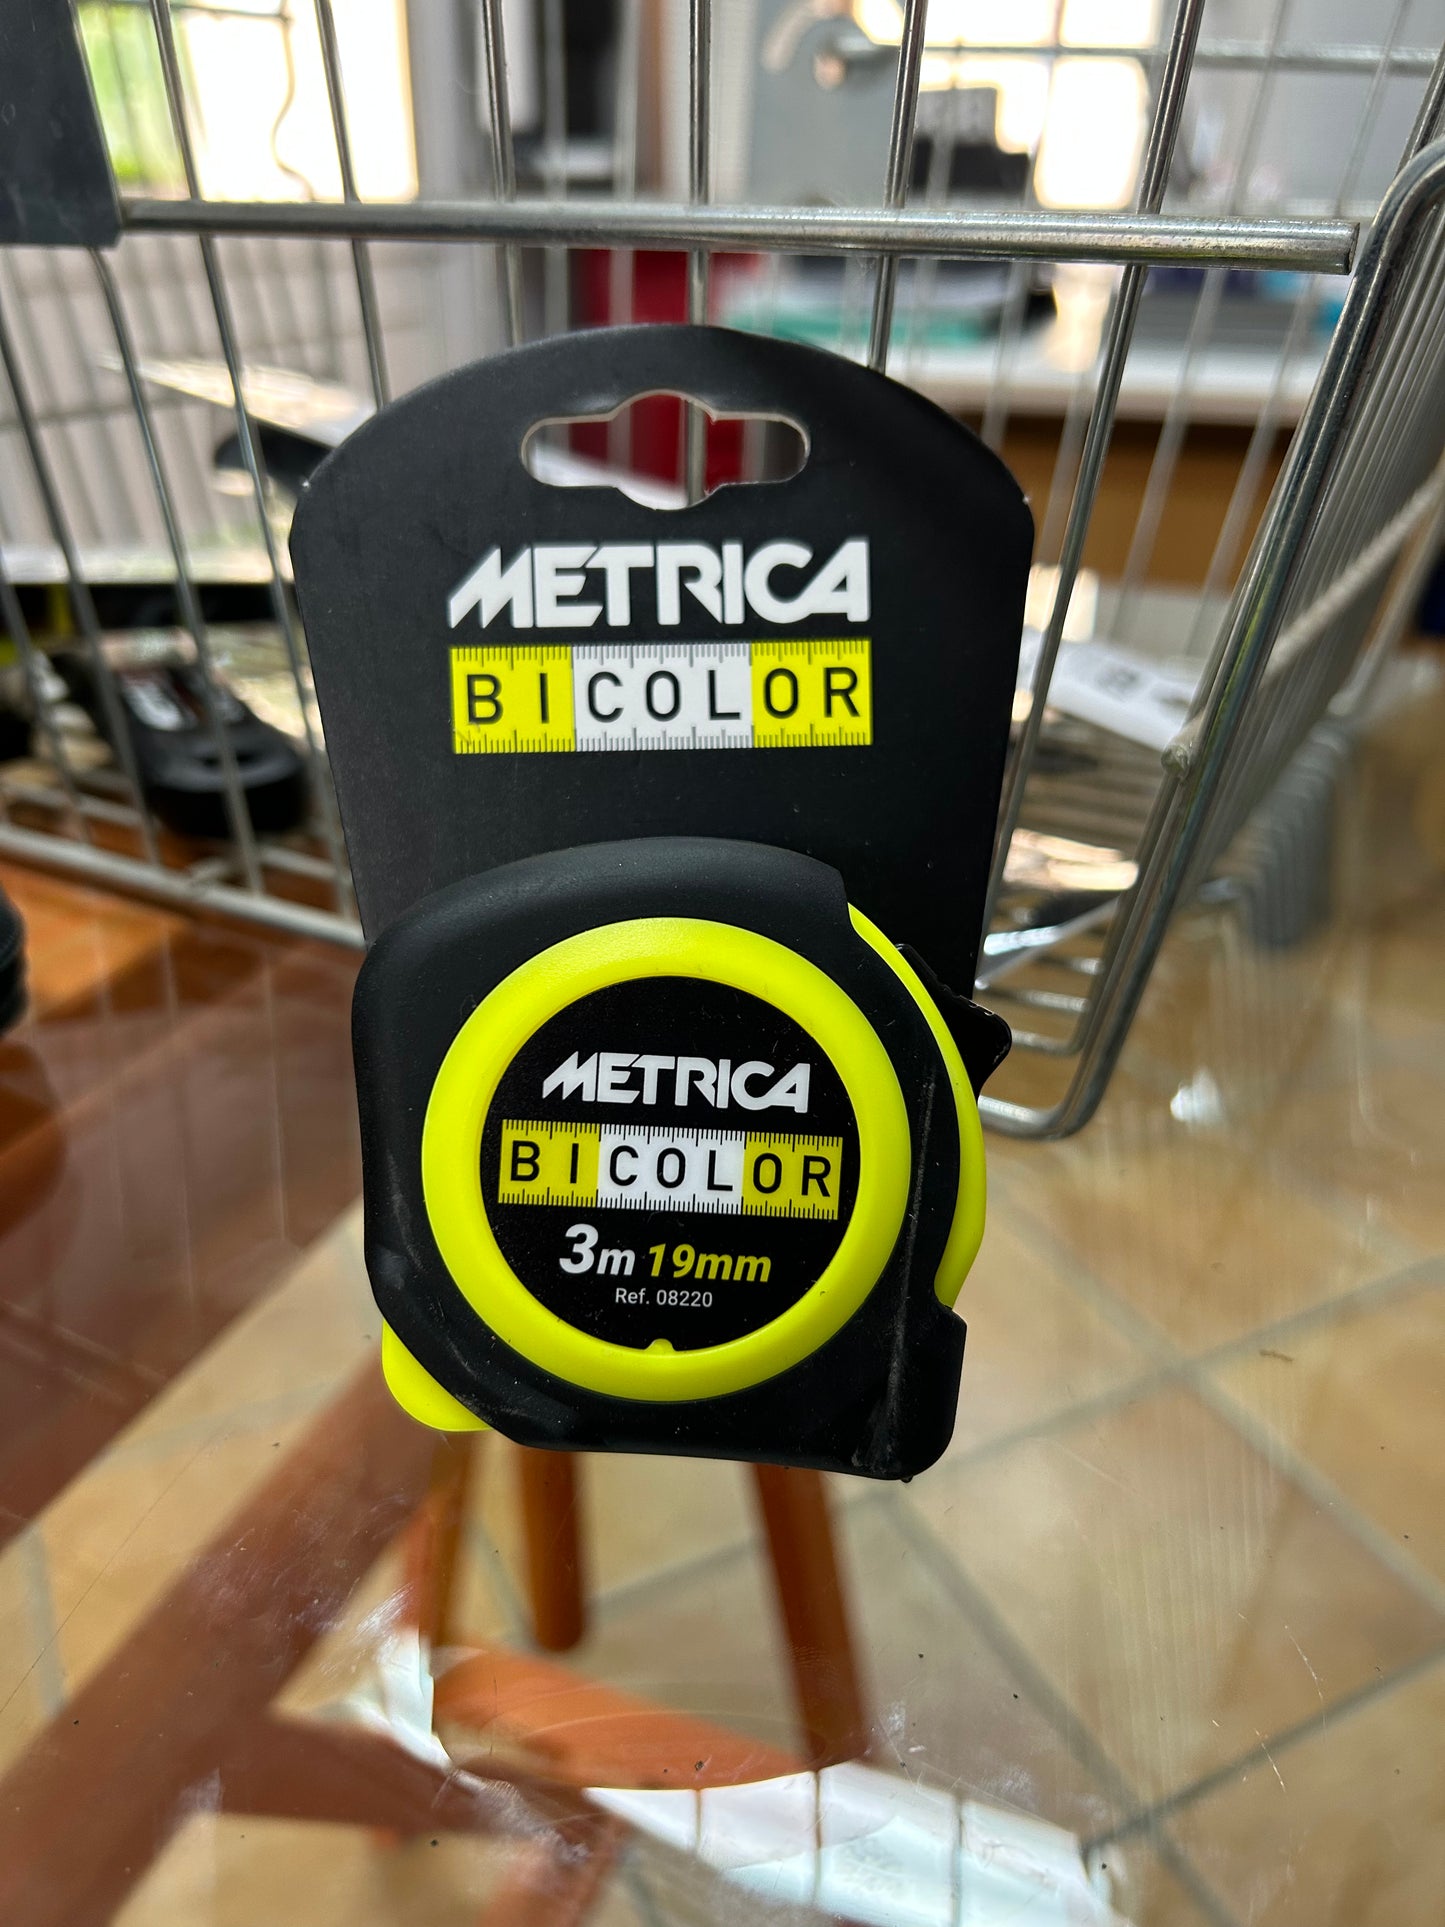 Metro Bicolor - Metrica